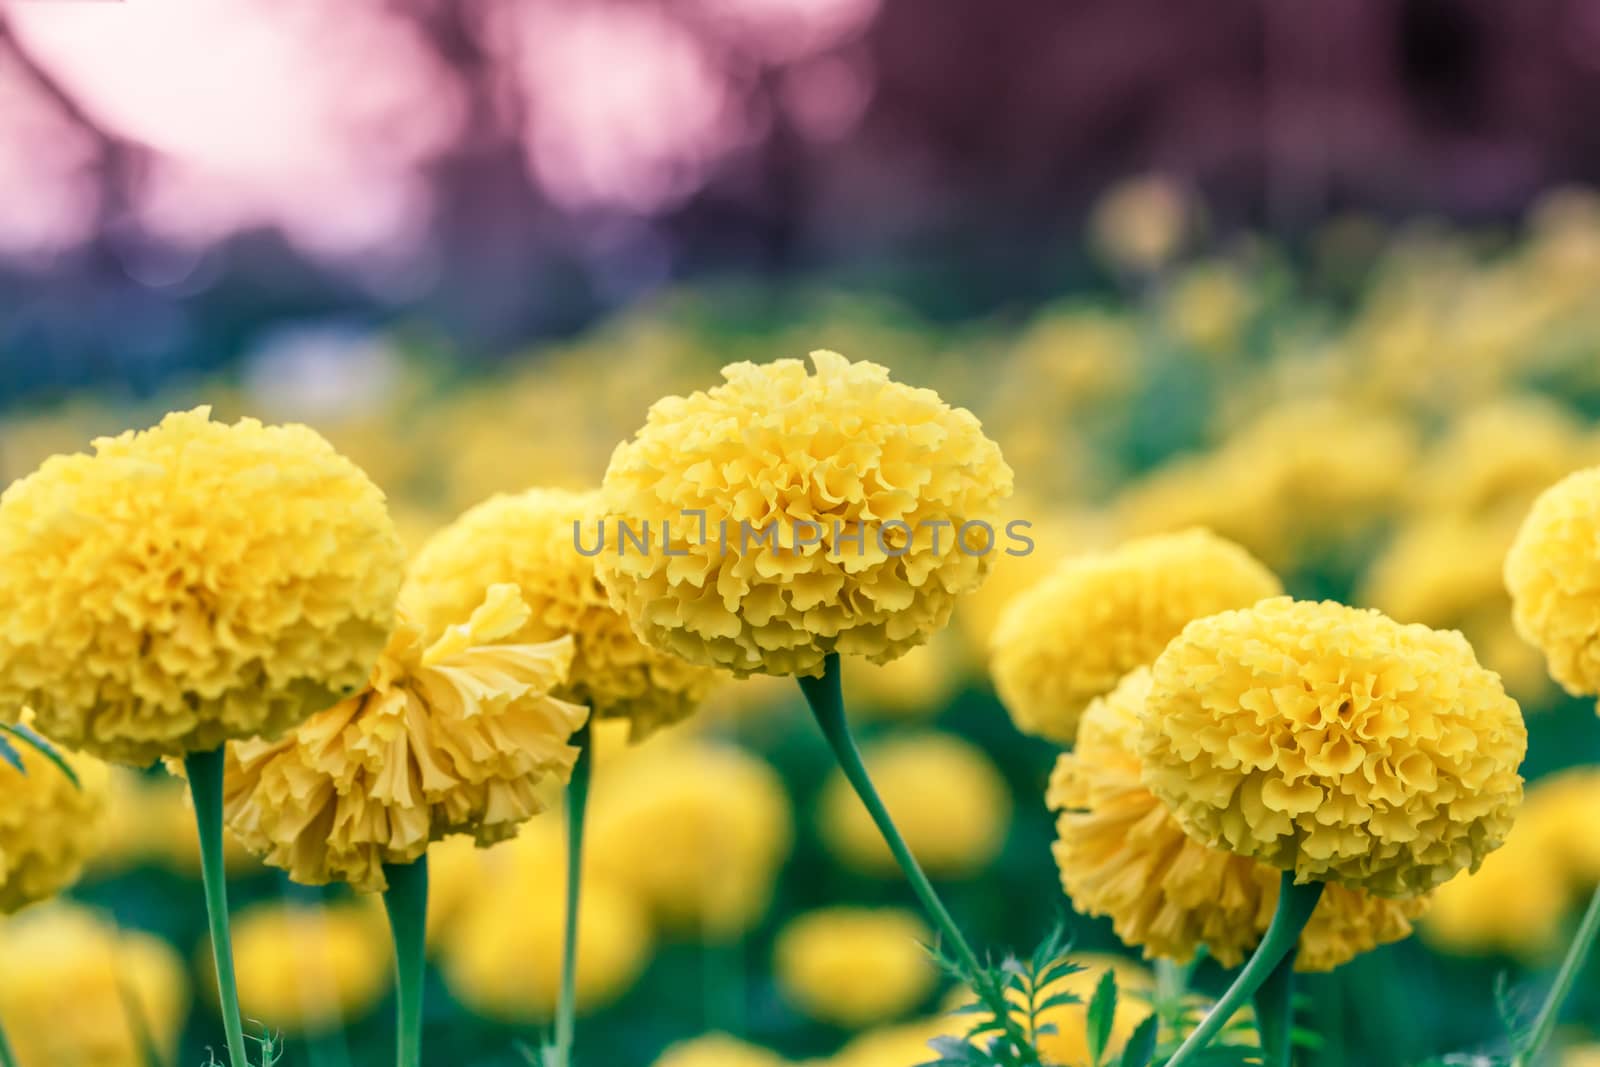 marigold flowers in the garden blur by Natstocker